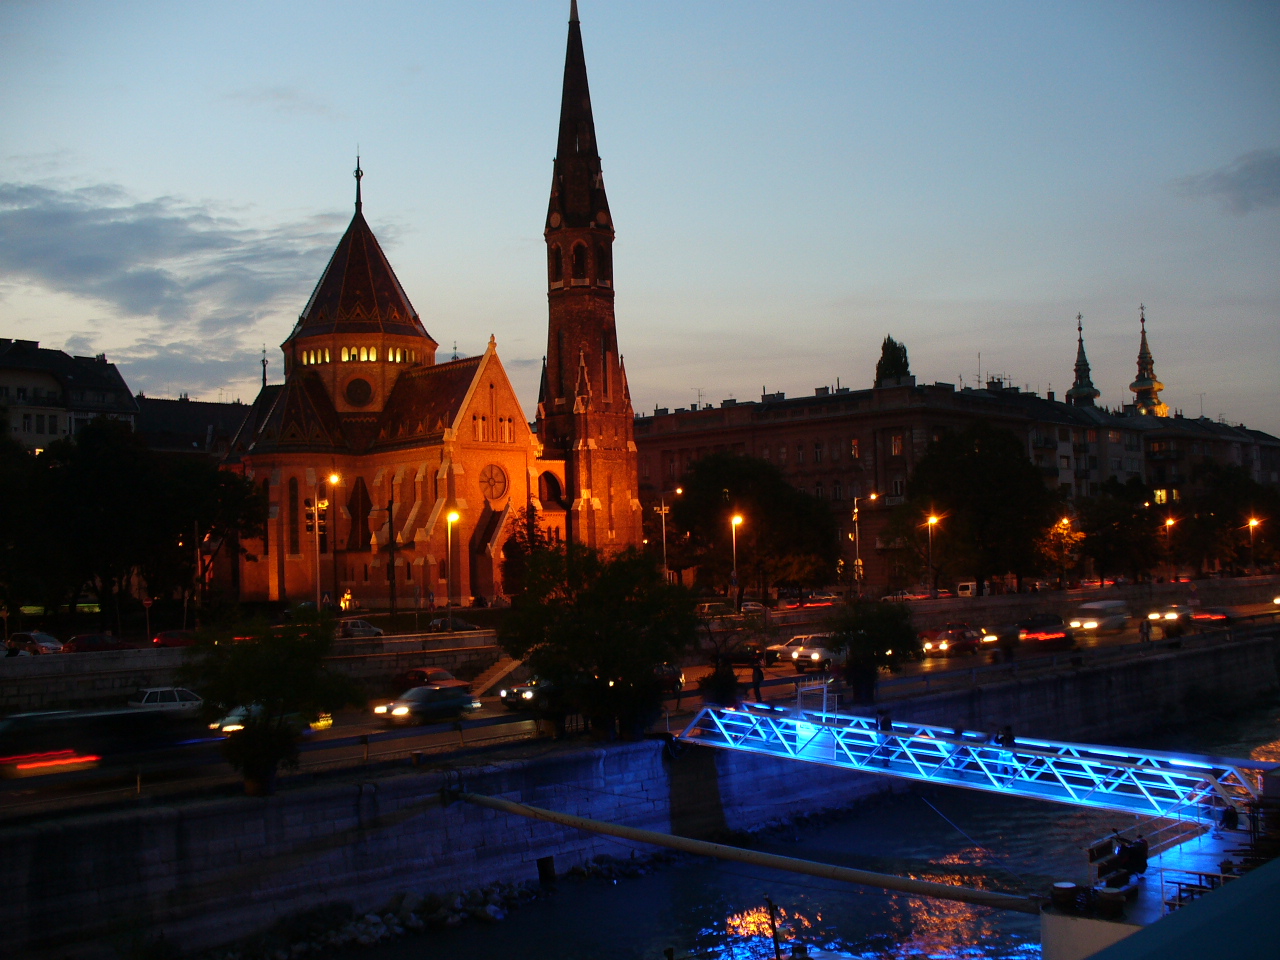 a bridge is lit up near some buildings